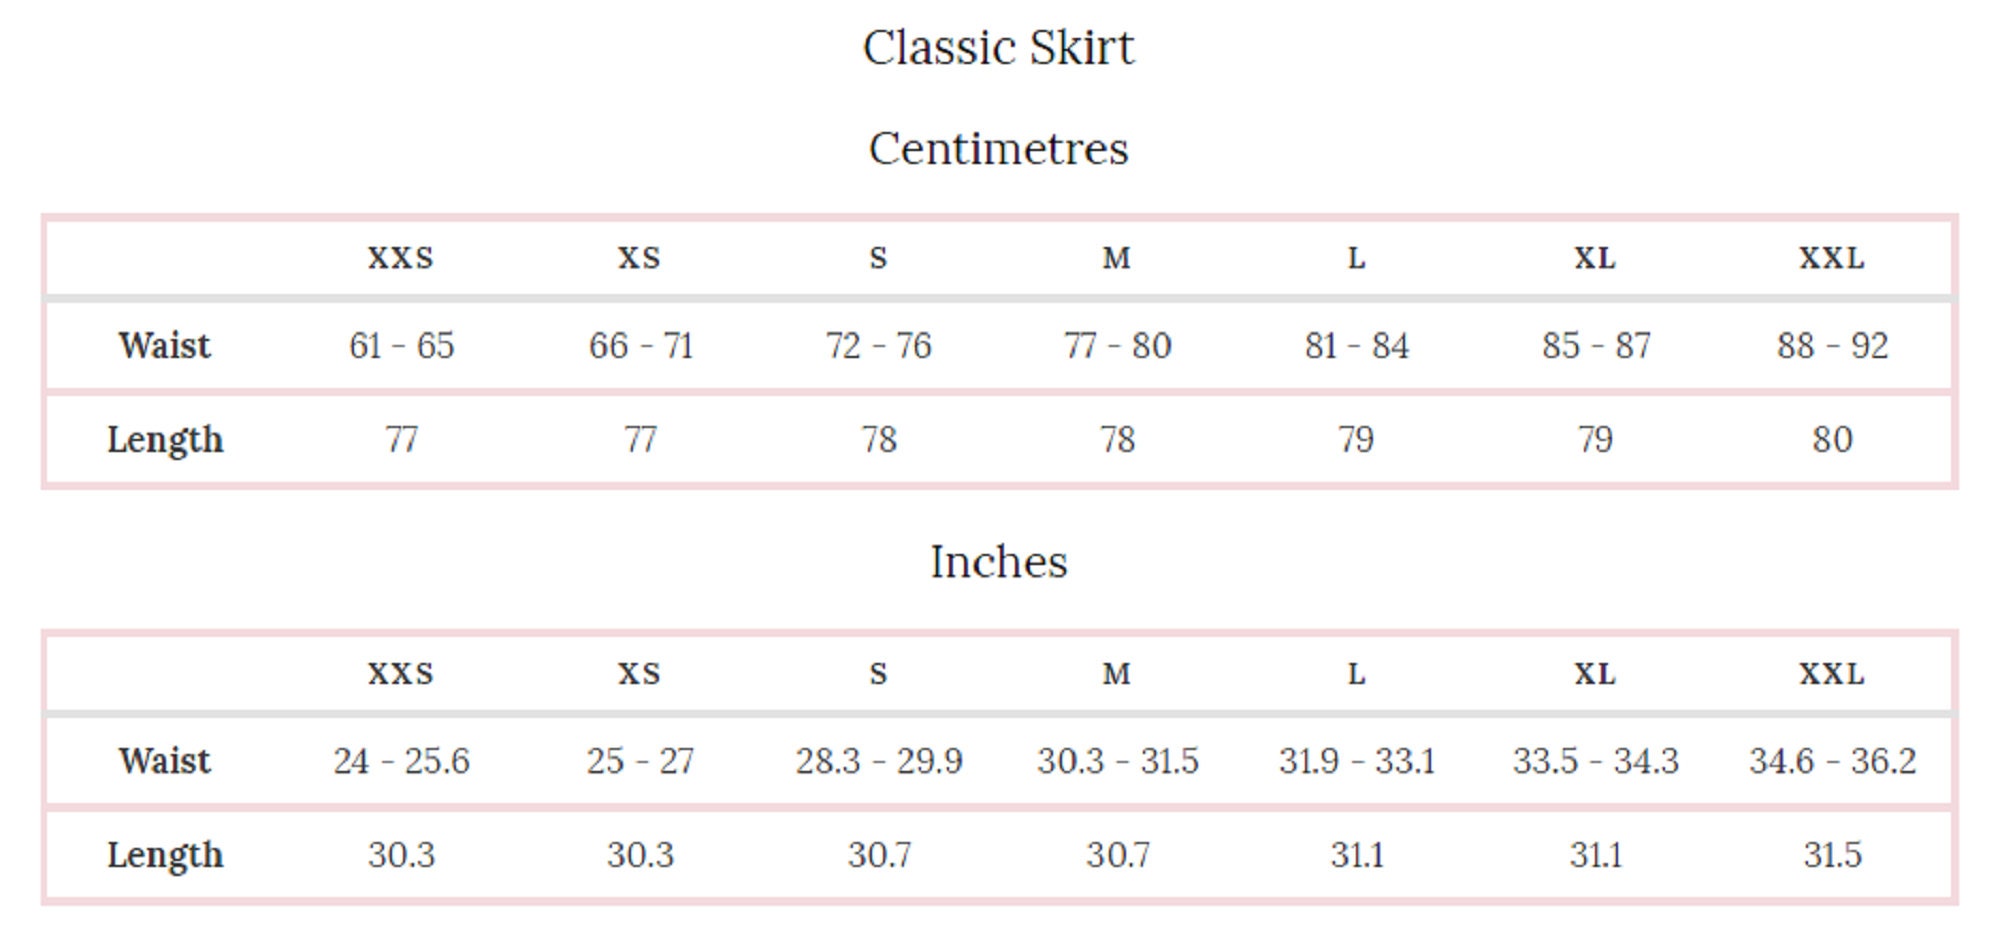 Son de Flor Skirt has a concealed color aligned zip | Etsy